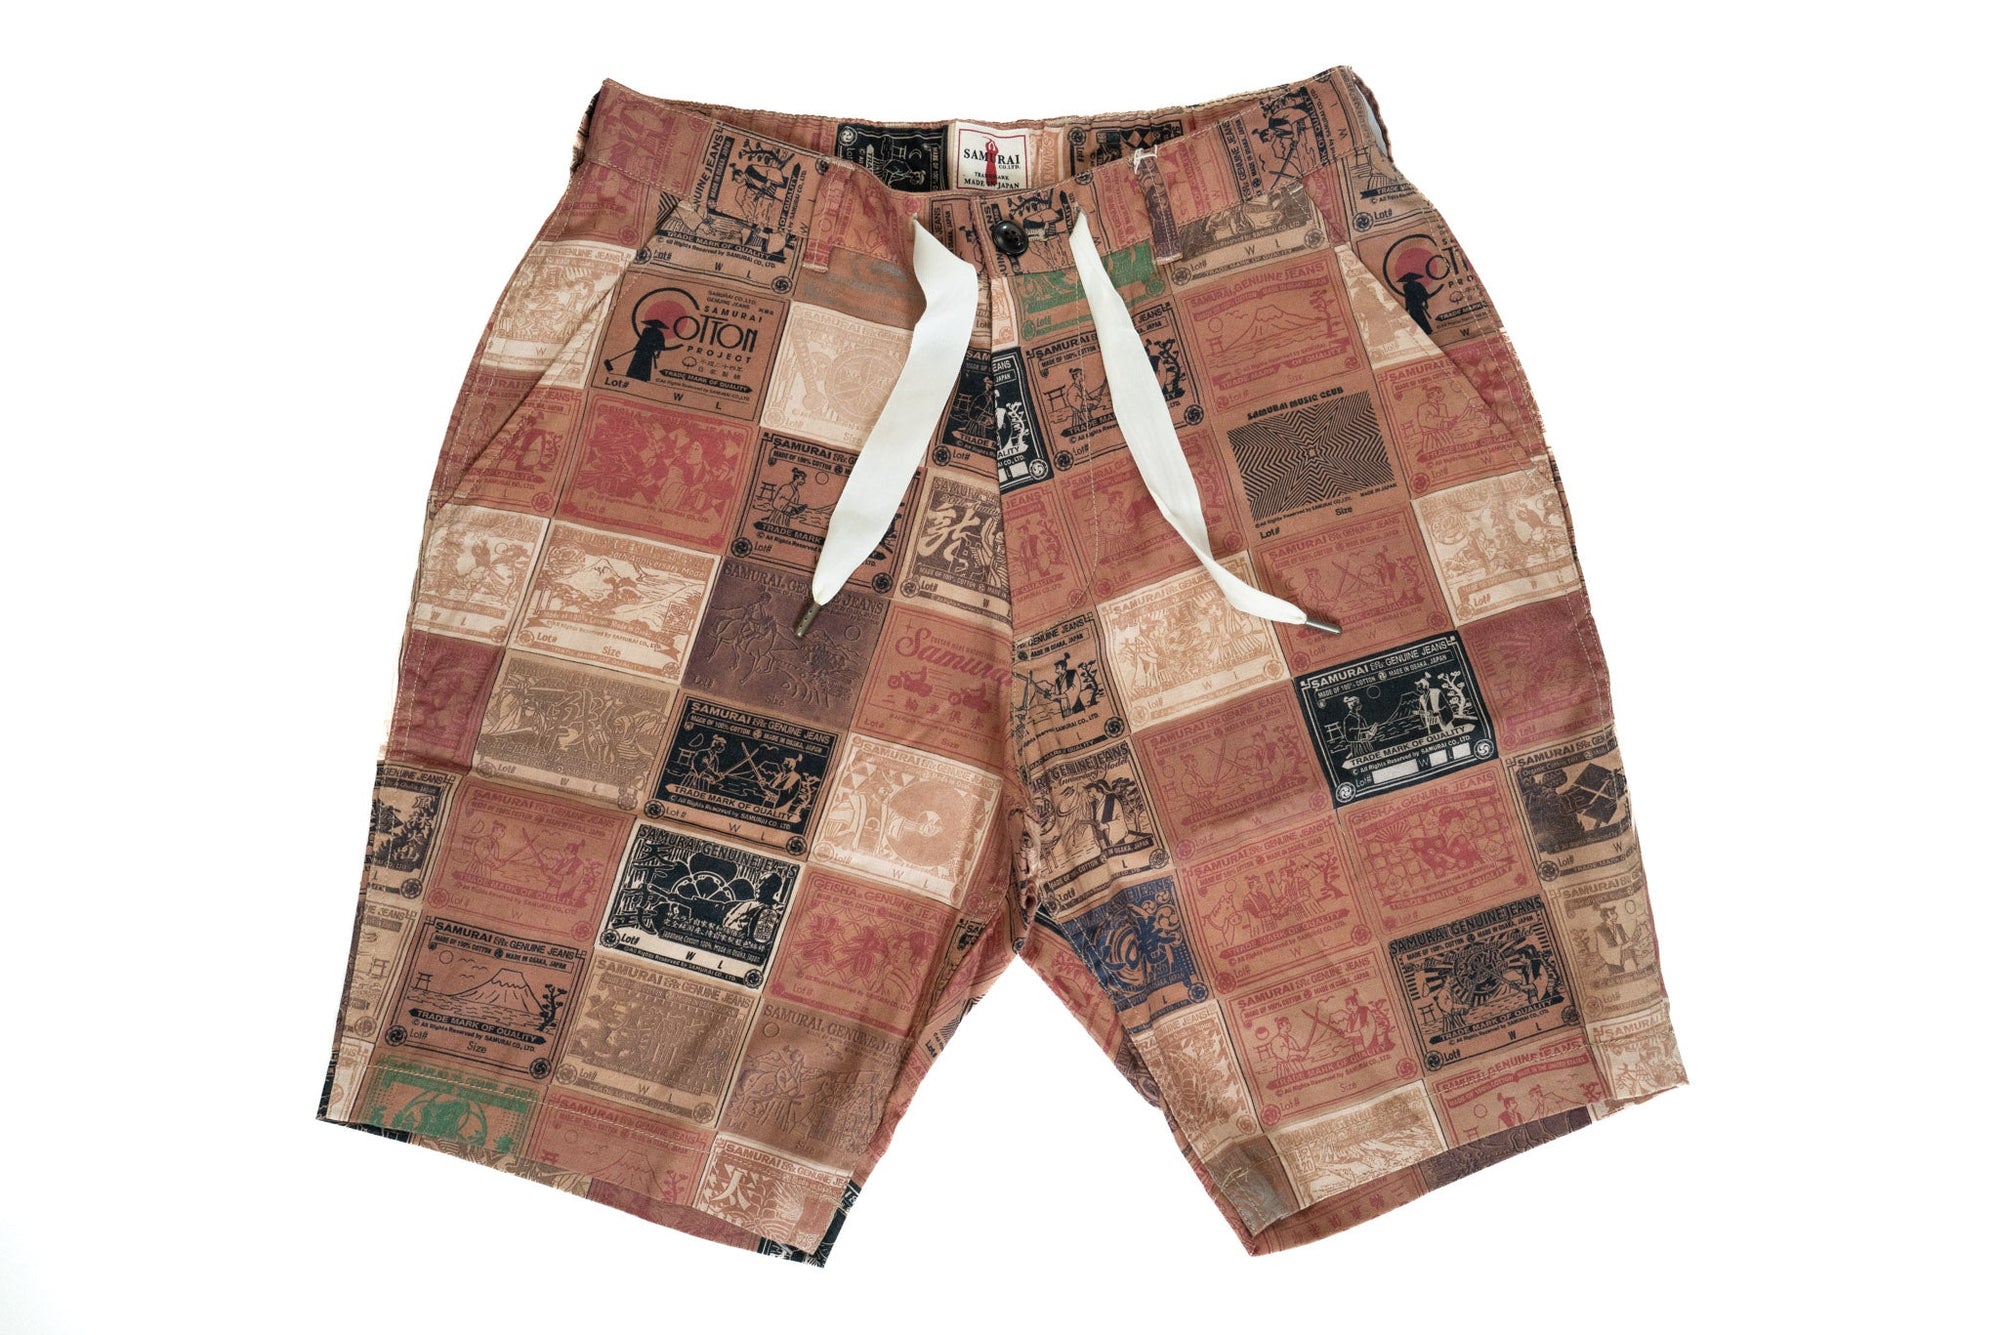 Samurai "Patch-Work" Coastal Shorts